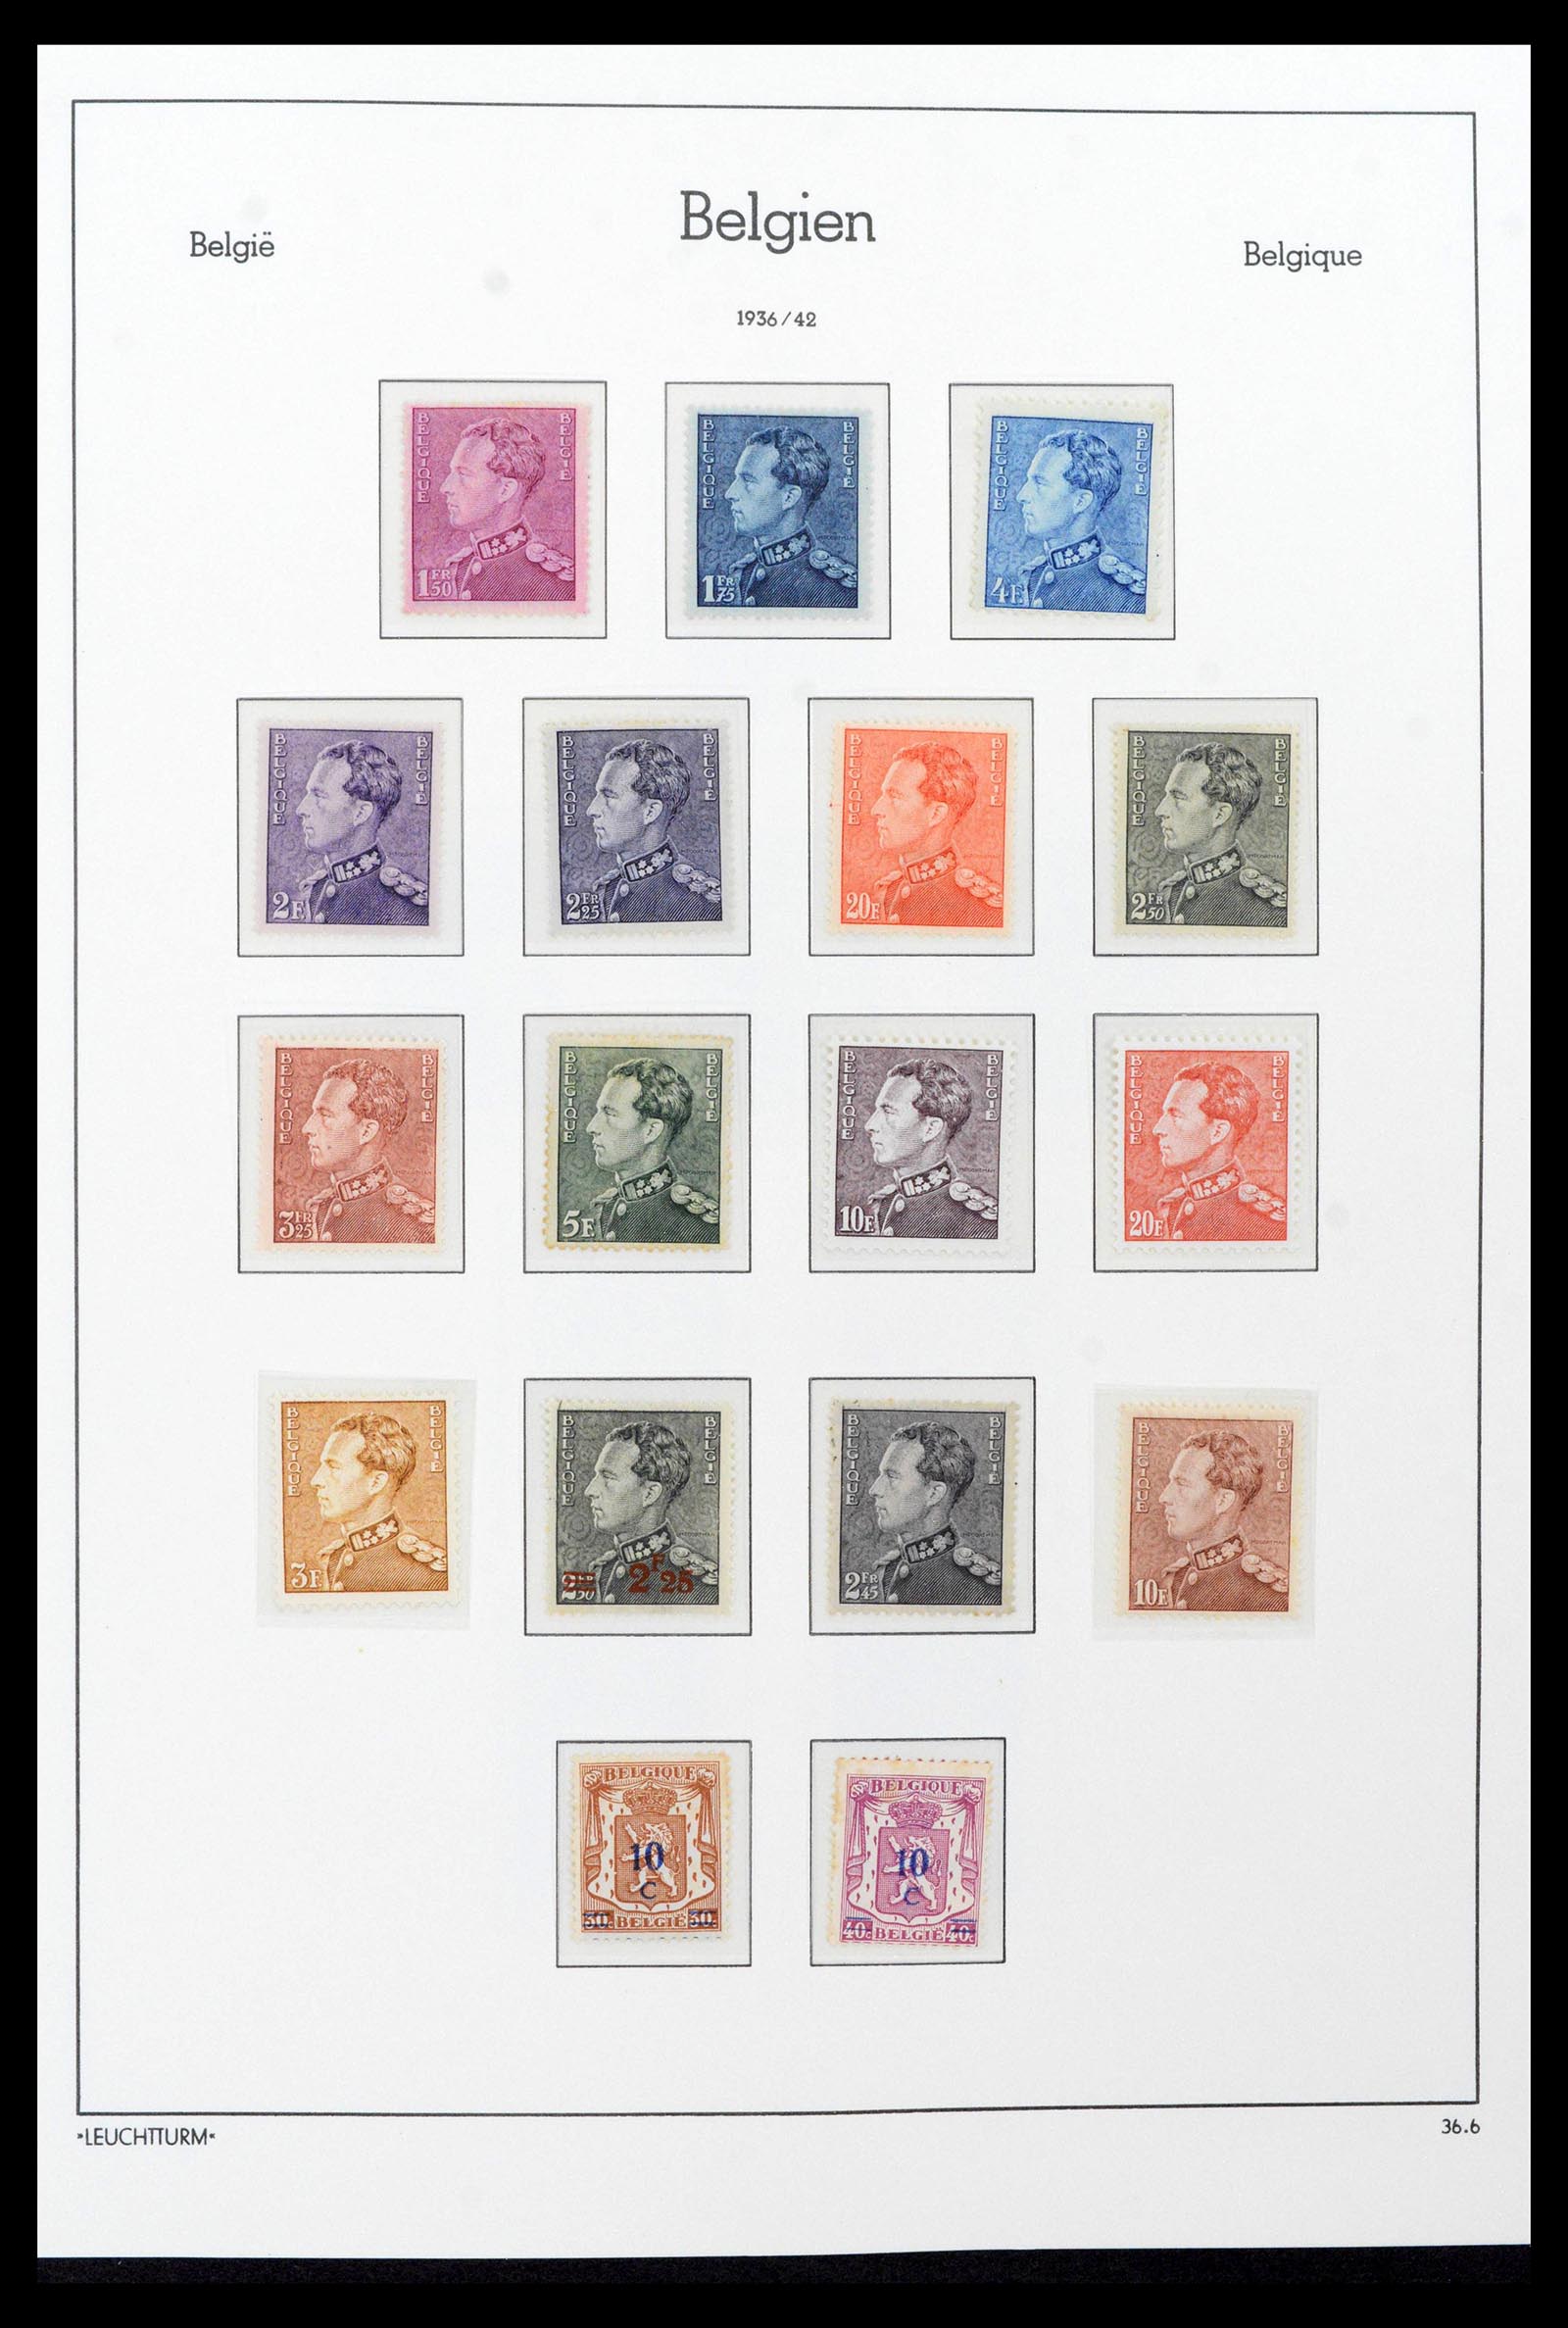 39137 0061 - Stamp collection 39137 Belgium 1849-2002.